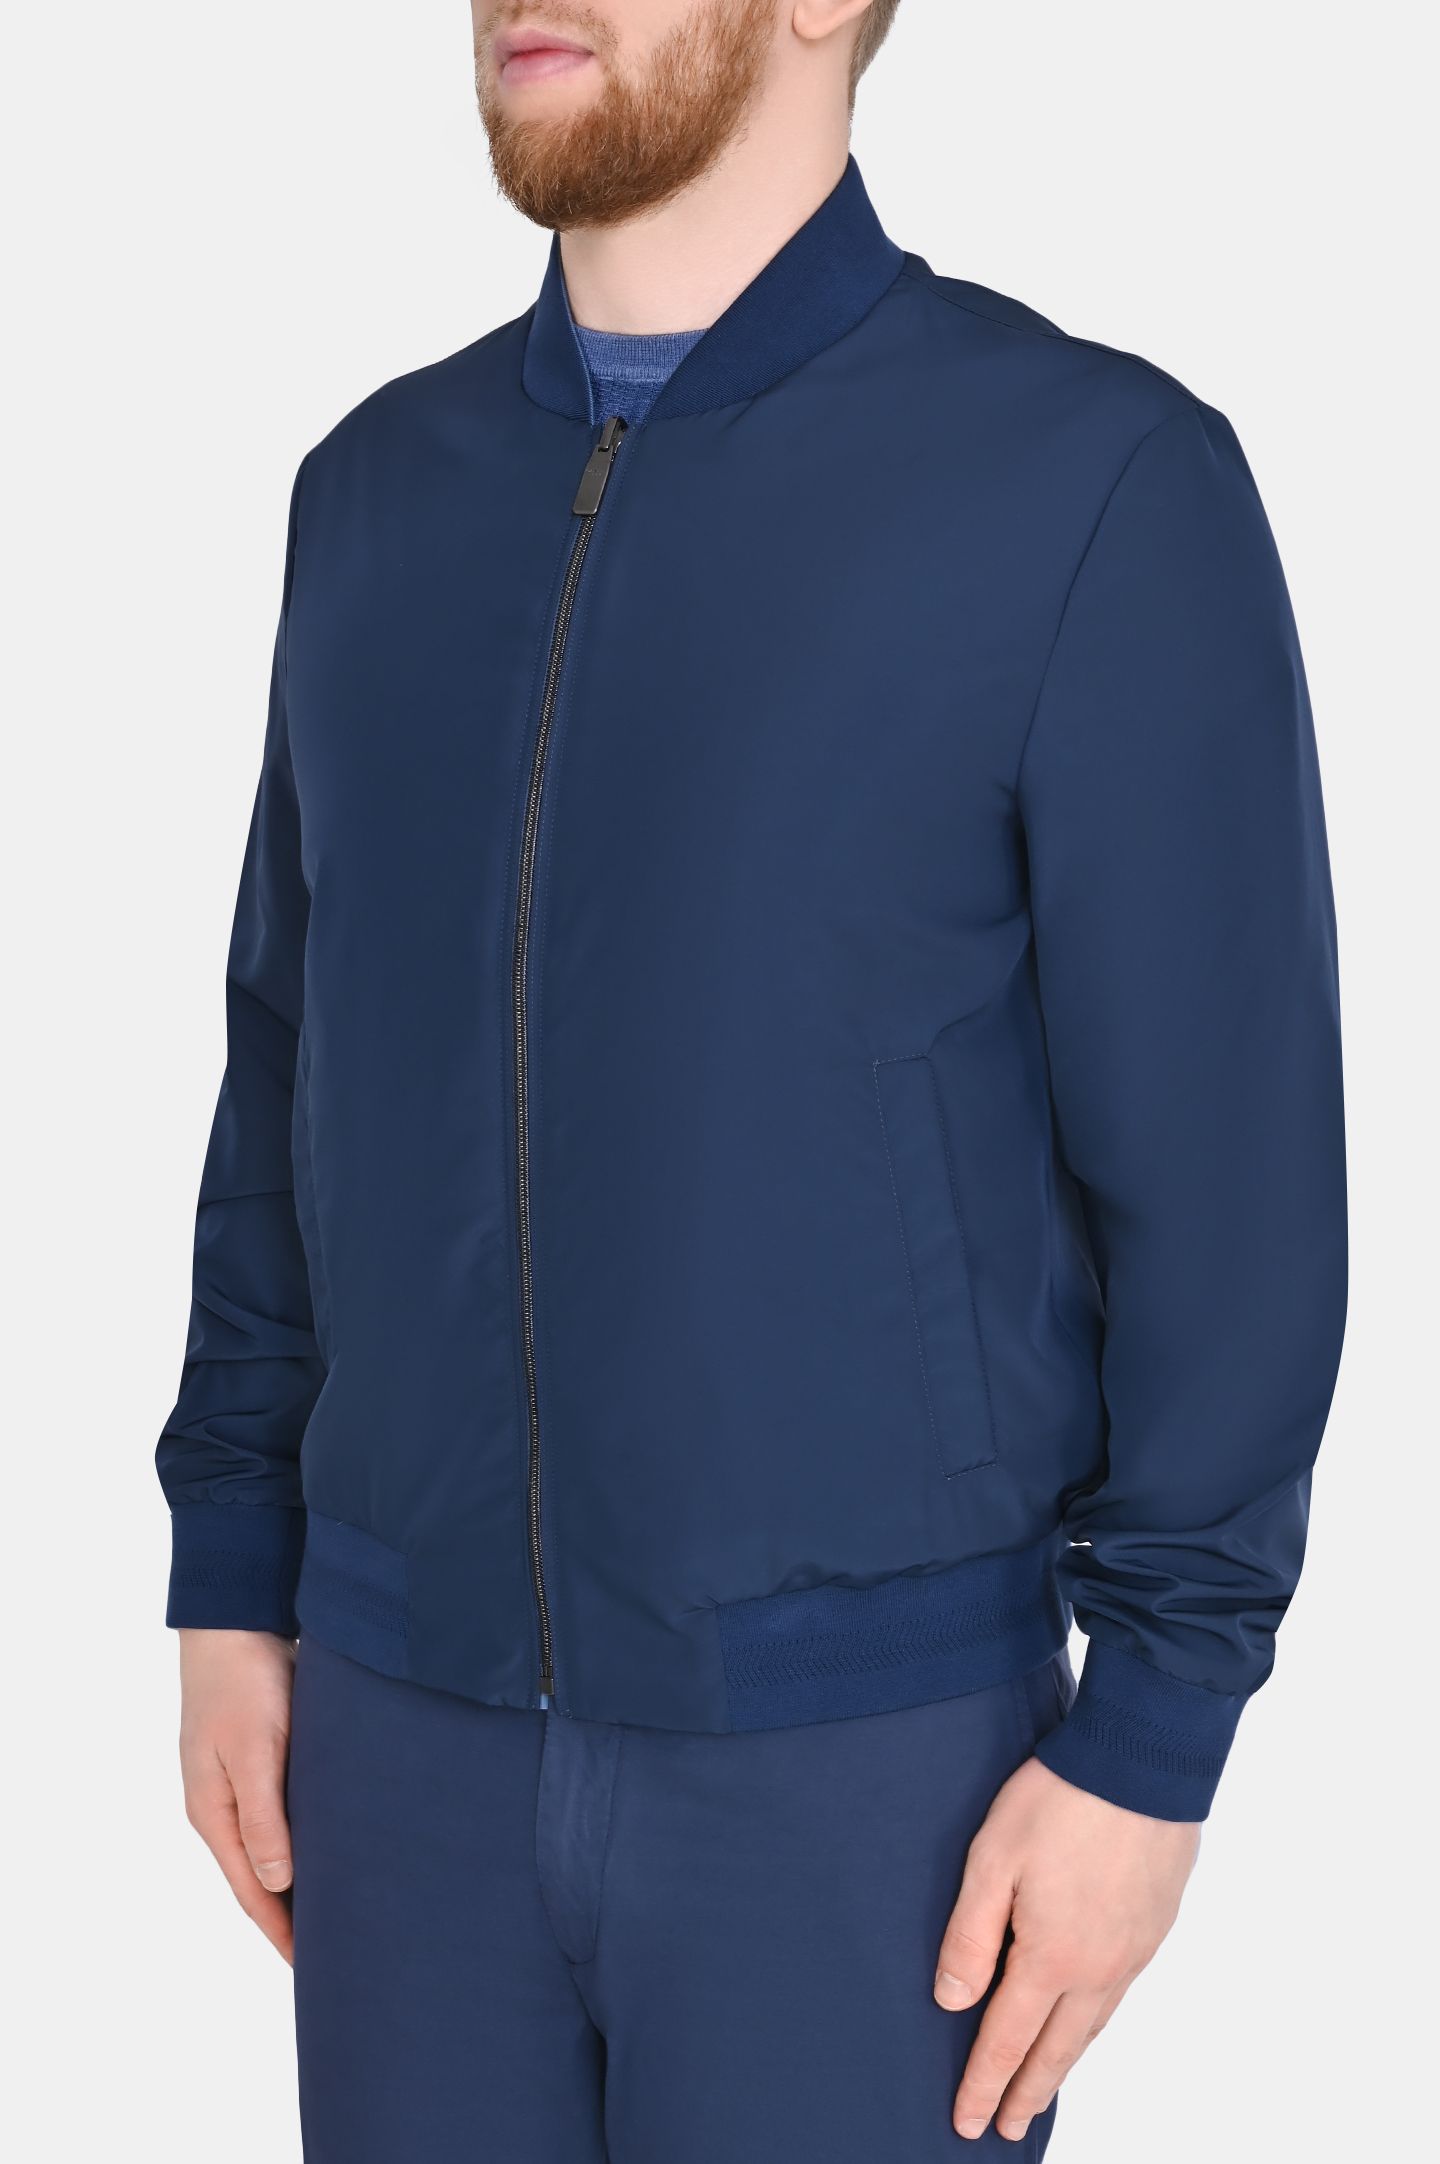 Куртка CANALI SG01121 O40686, цвет: Синий, Мужской